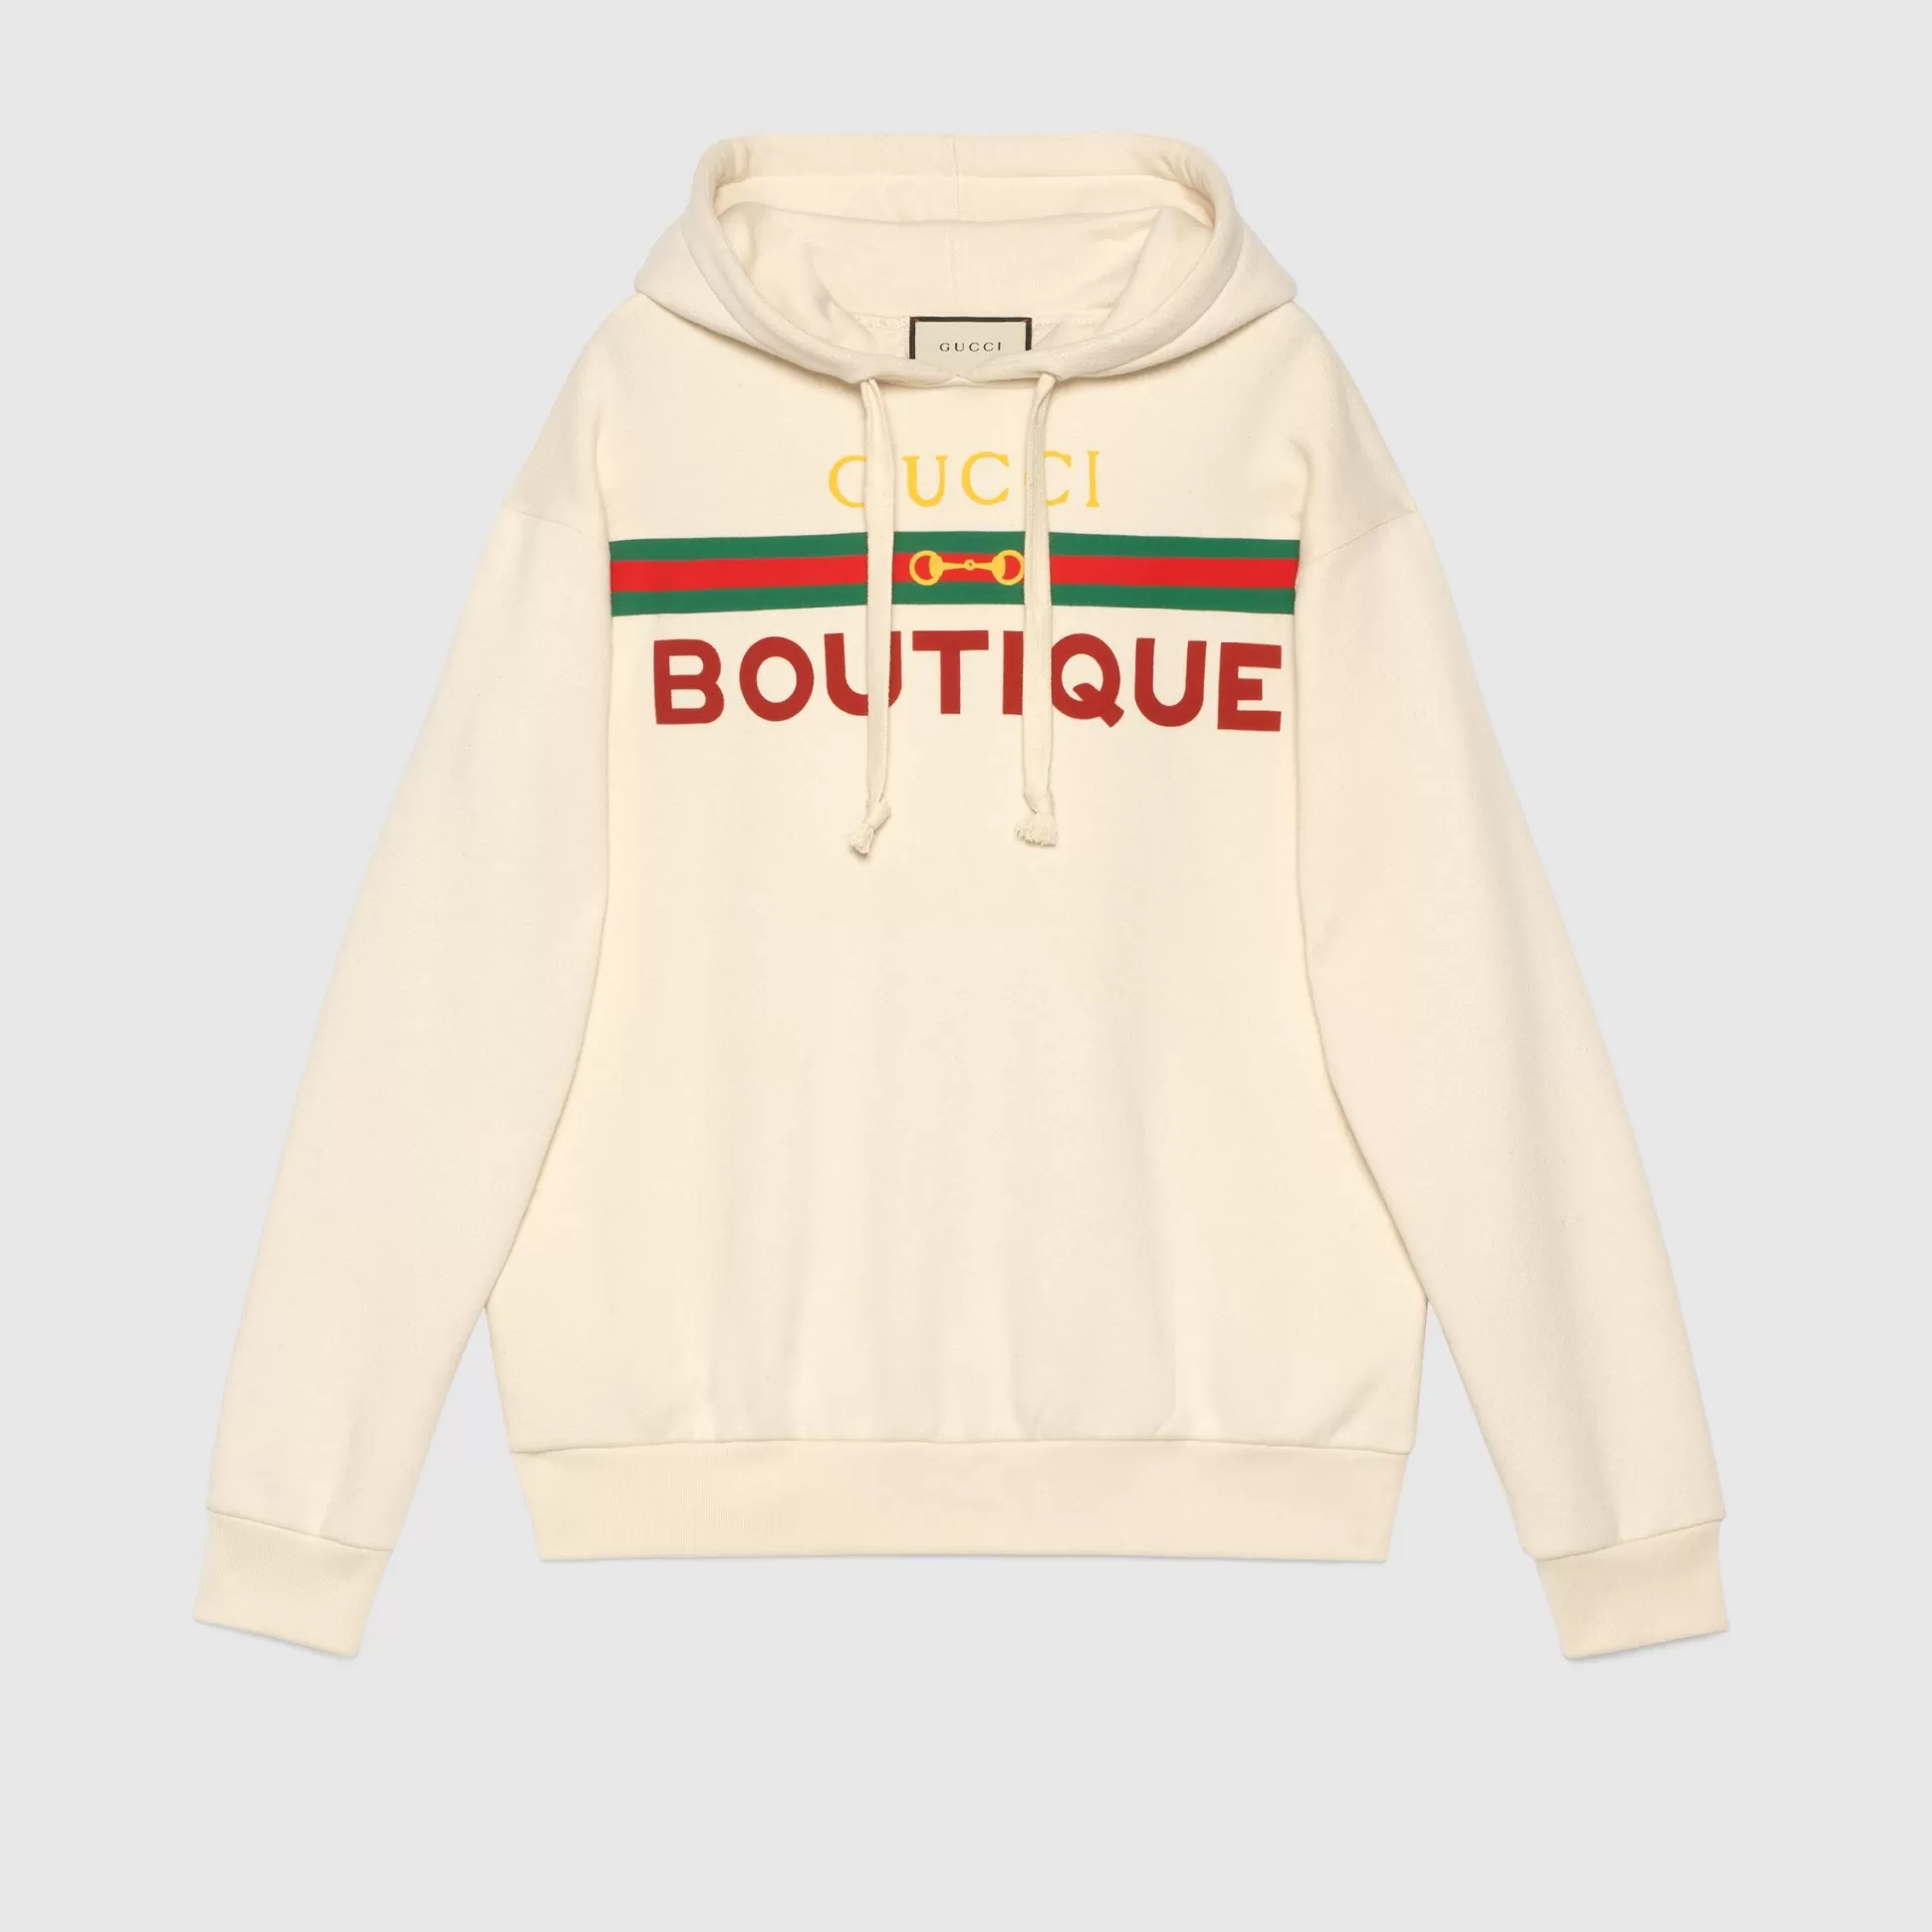 GUCCI Boutique Print Sweatshirt-Men Tracksuits & Sweatshirts